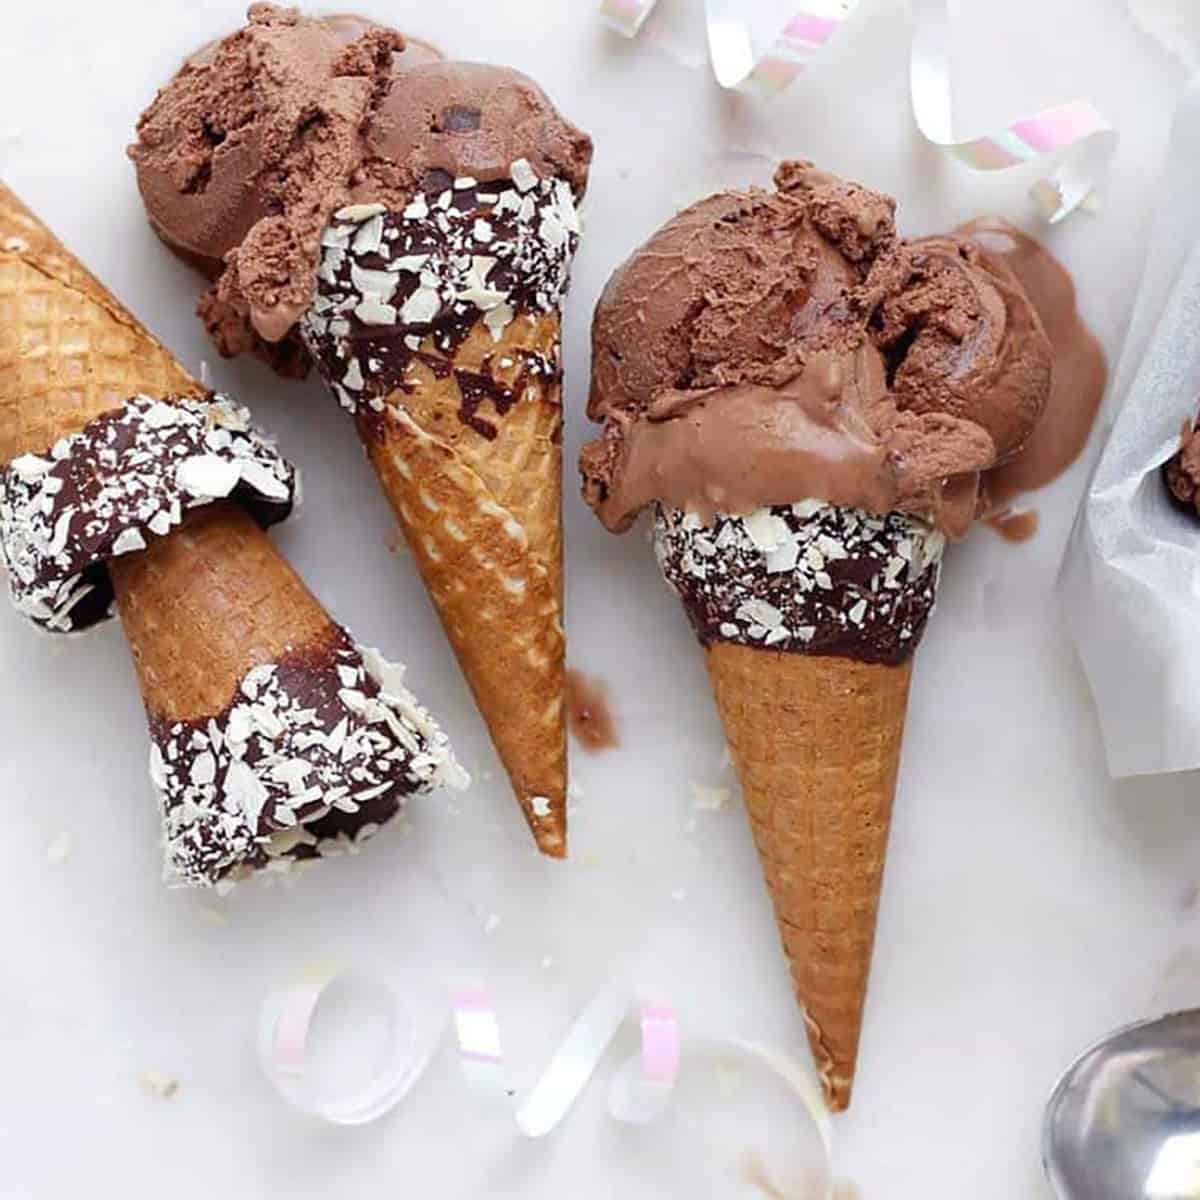 no churn chocolate ice cream in cones.